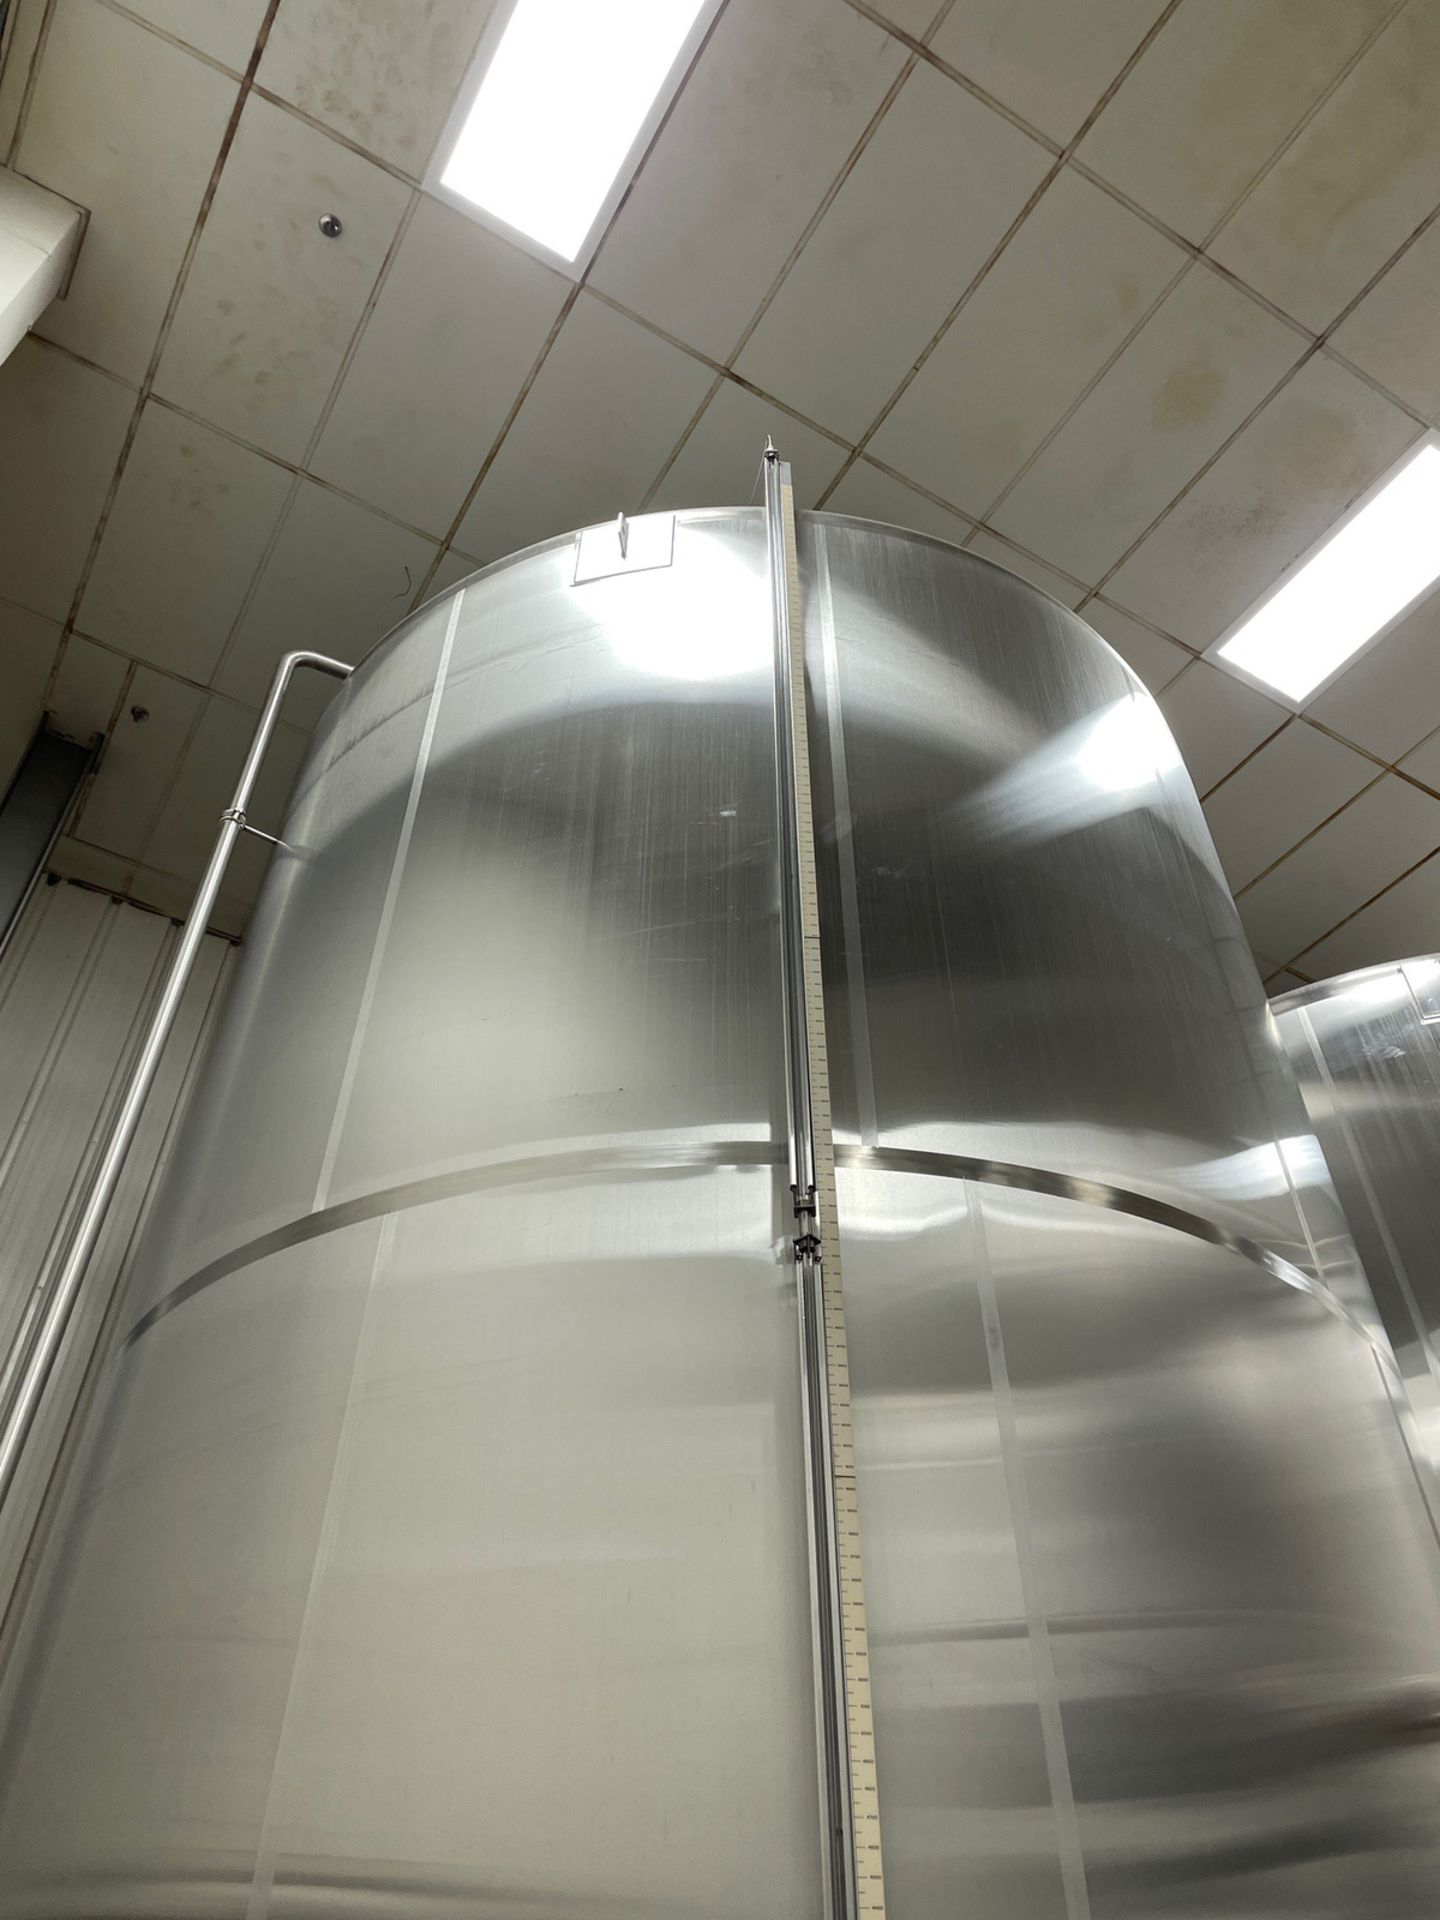 Cherry Burrell 15,000 Gallon Stainless Steel Horizontal Agitated Tank, Dish Bottom, | Rig Fee: $6000 - Image 3 of 11